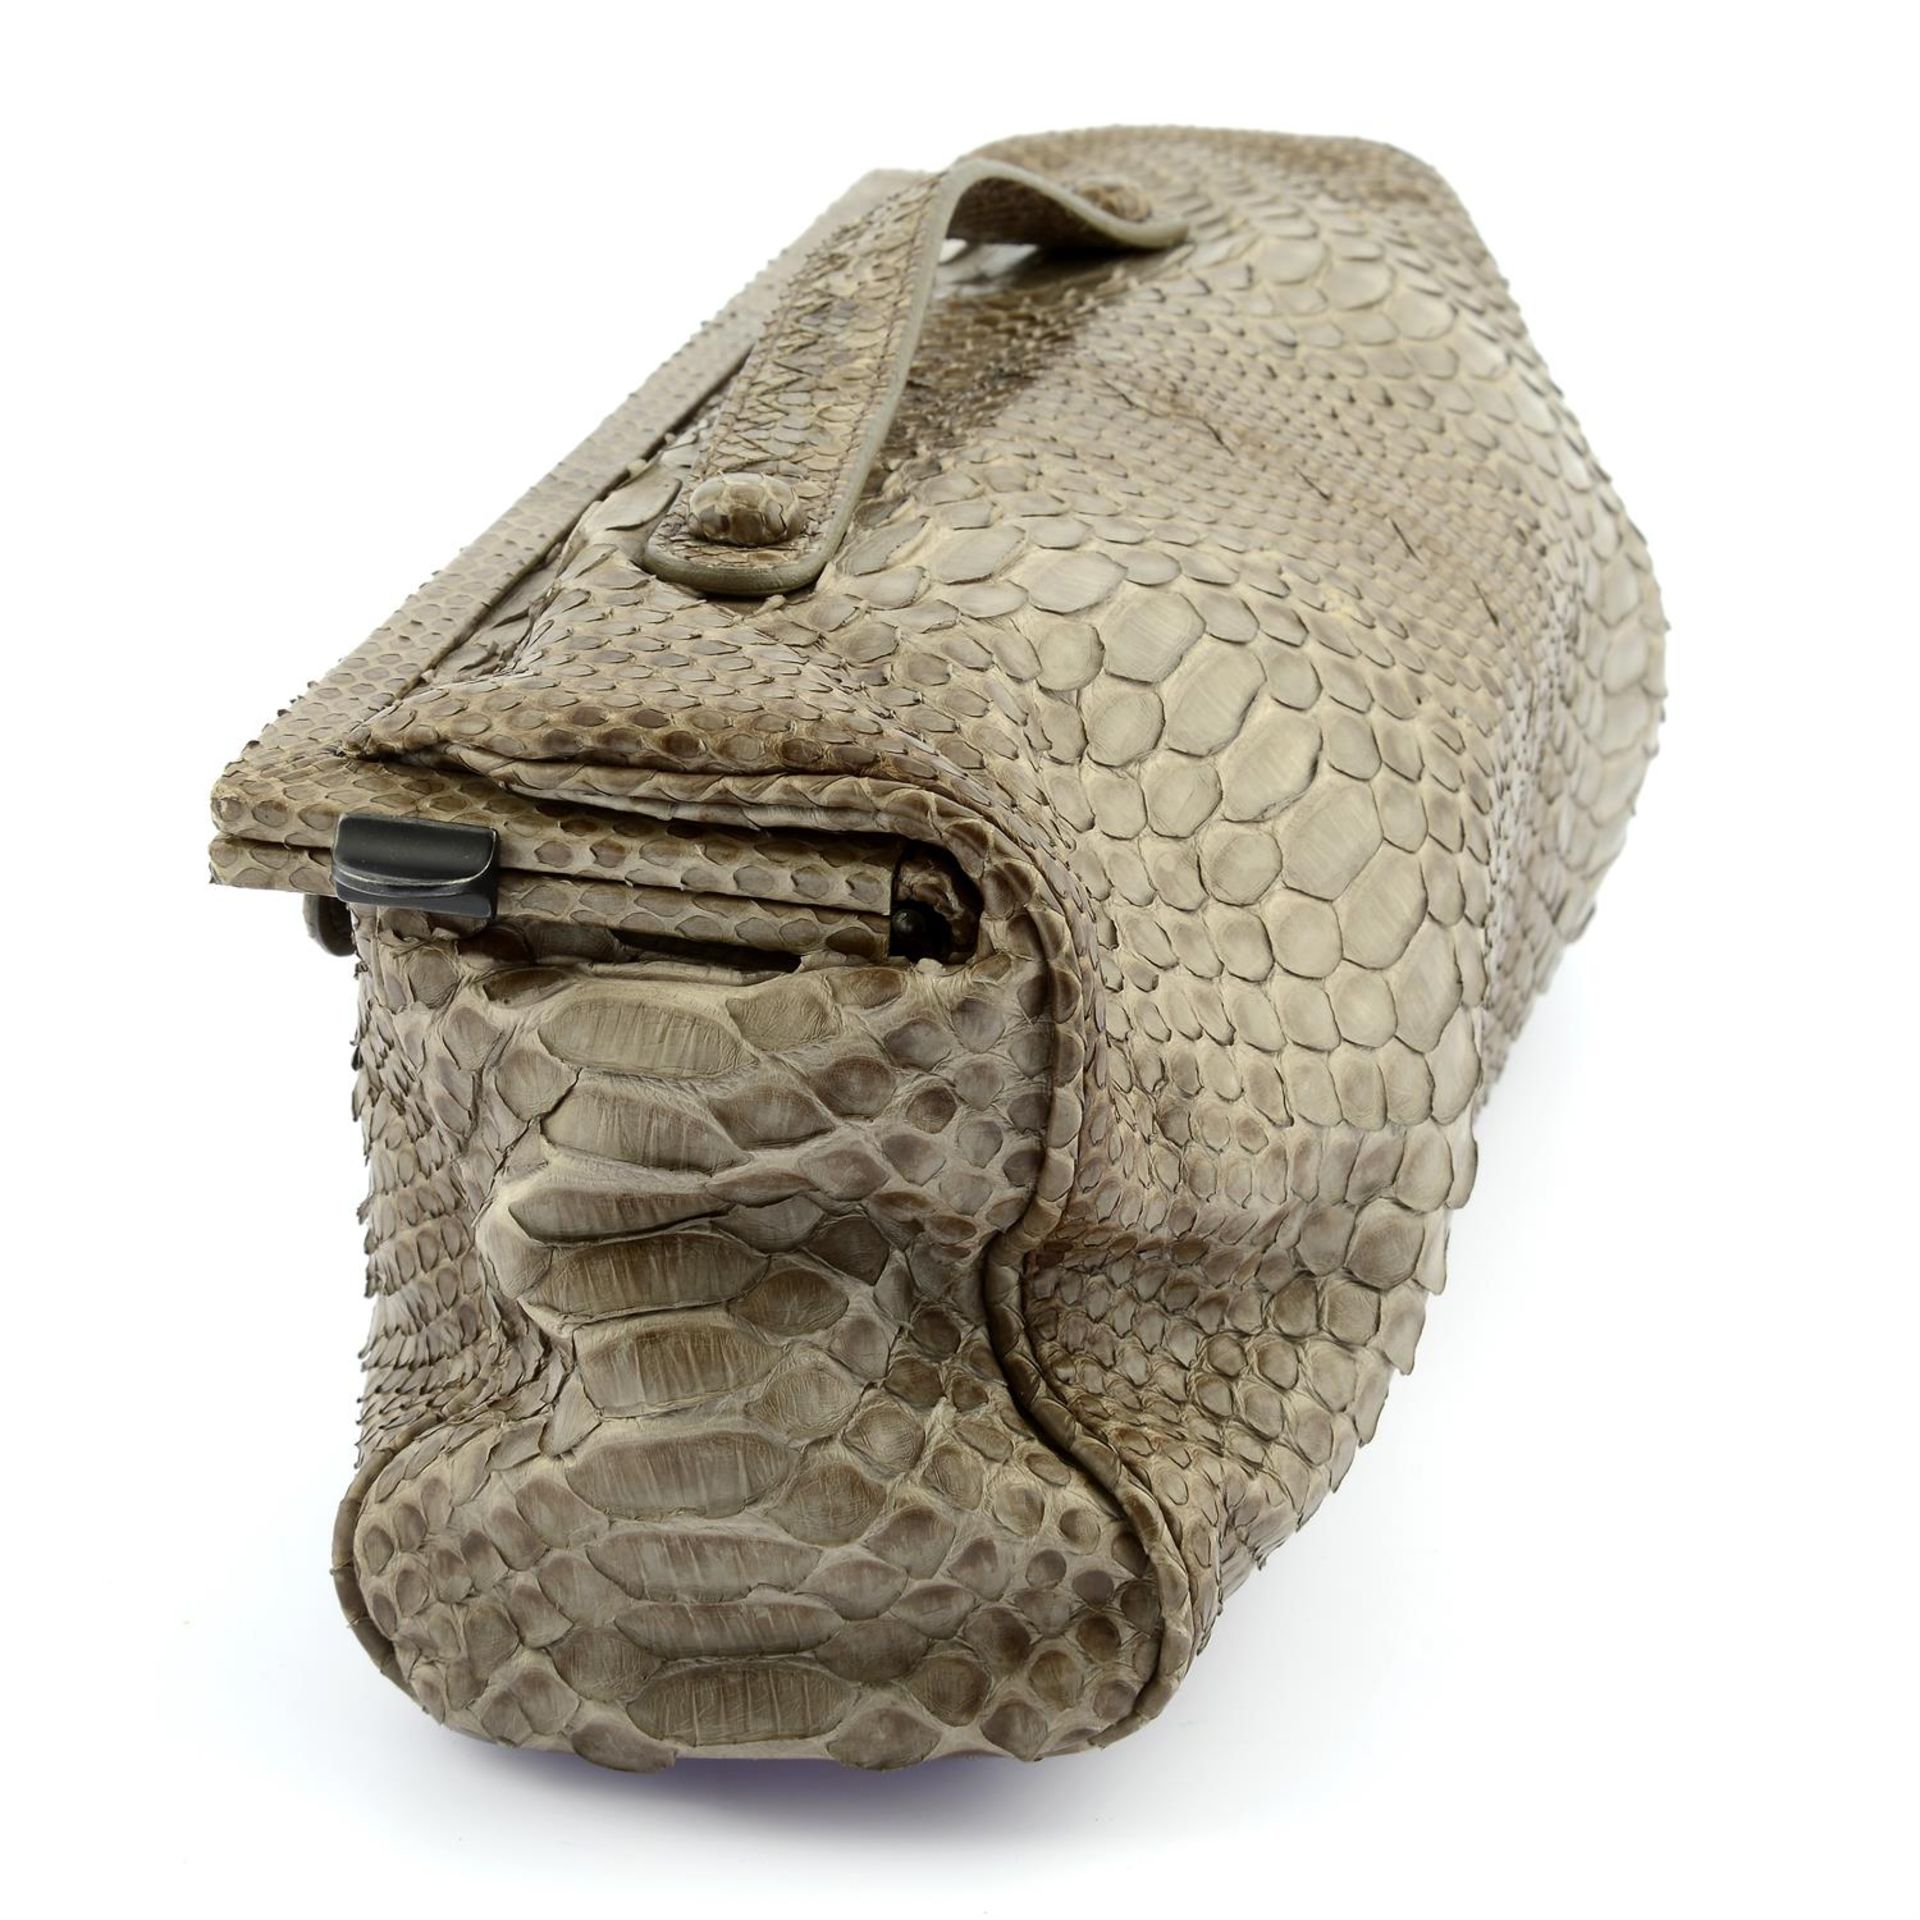 BOTTEGA VENETA - a brown Python leather clutch bag. - Image 3 of 4